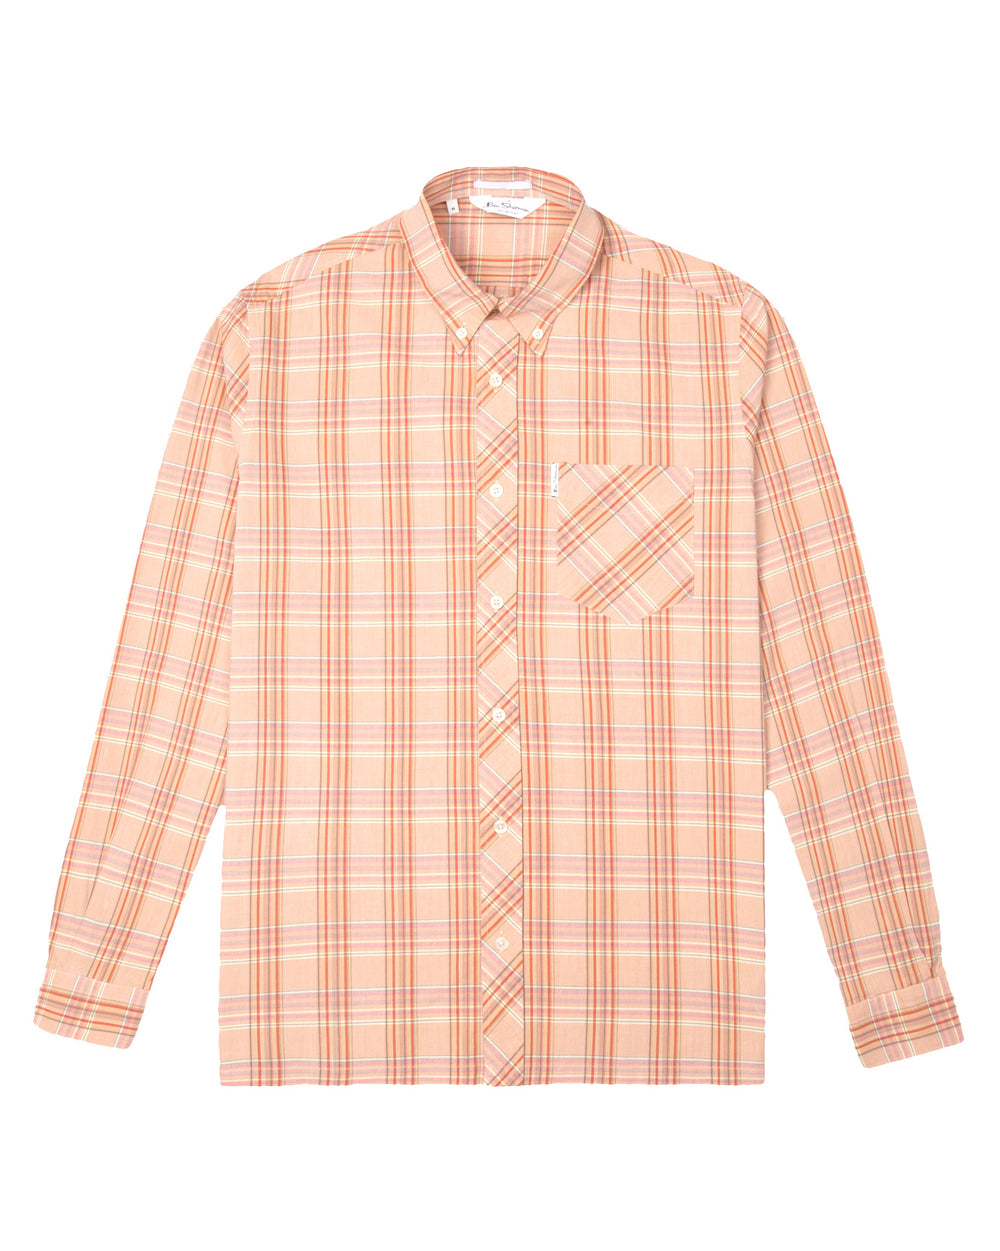 Long-Sleeve Archive Cambridge Shirt - Orange